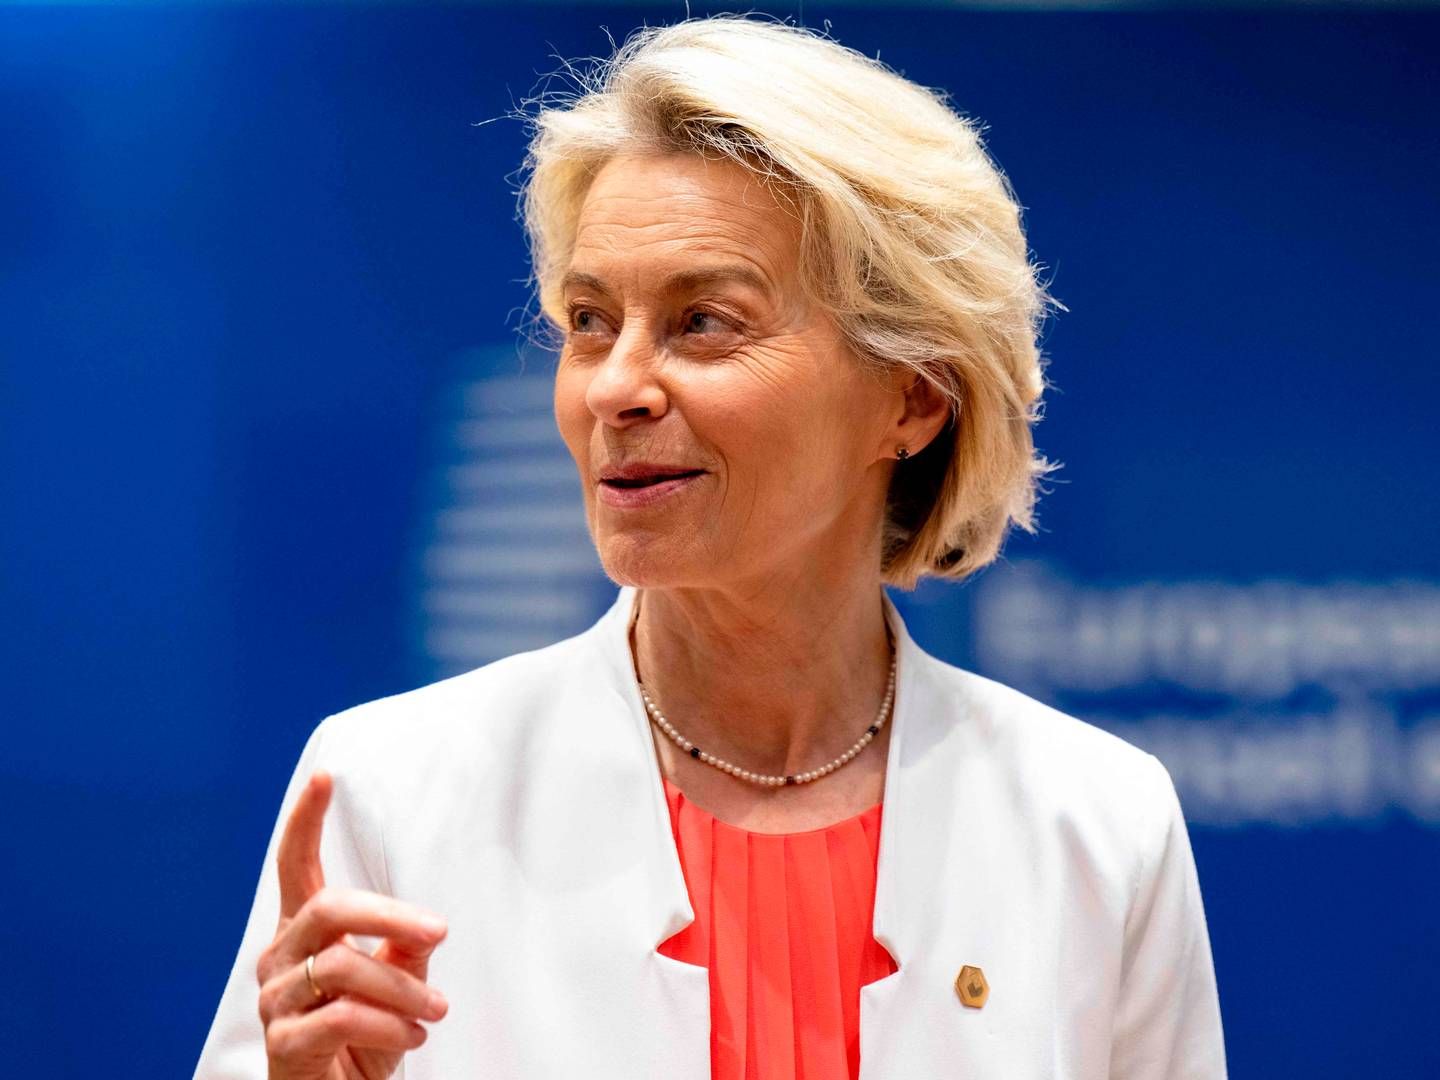 Ursula von der Leyen fortætter som kommissionsformand, skriver tyske medier. | Foto: Nick Gammon